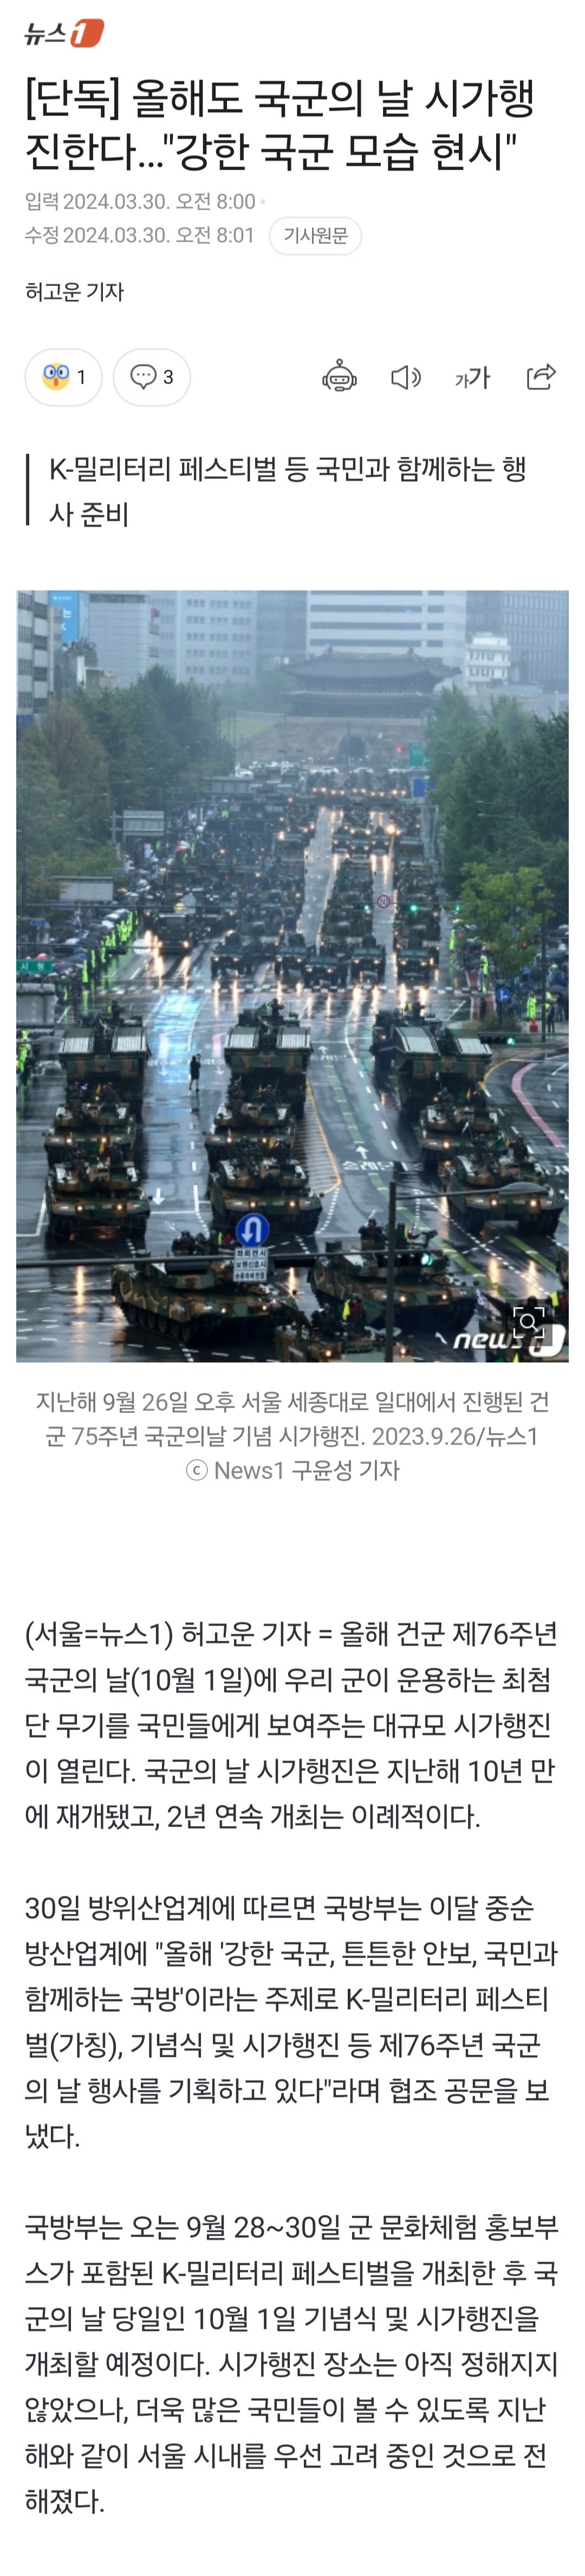 Screenshot_20240330_104318_Samsung Internet.jpg 국군의날 시가행진 올해도 할 것.. 굳이 이 상황에..?